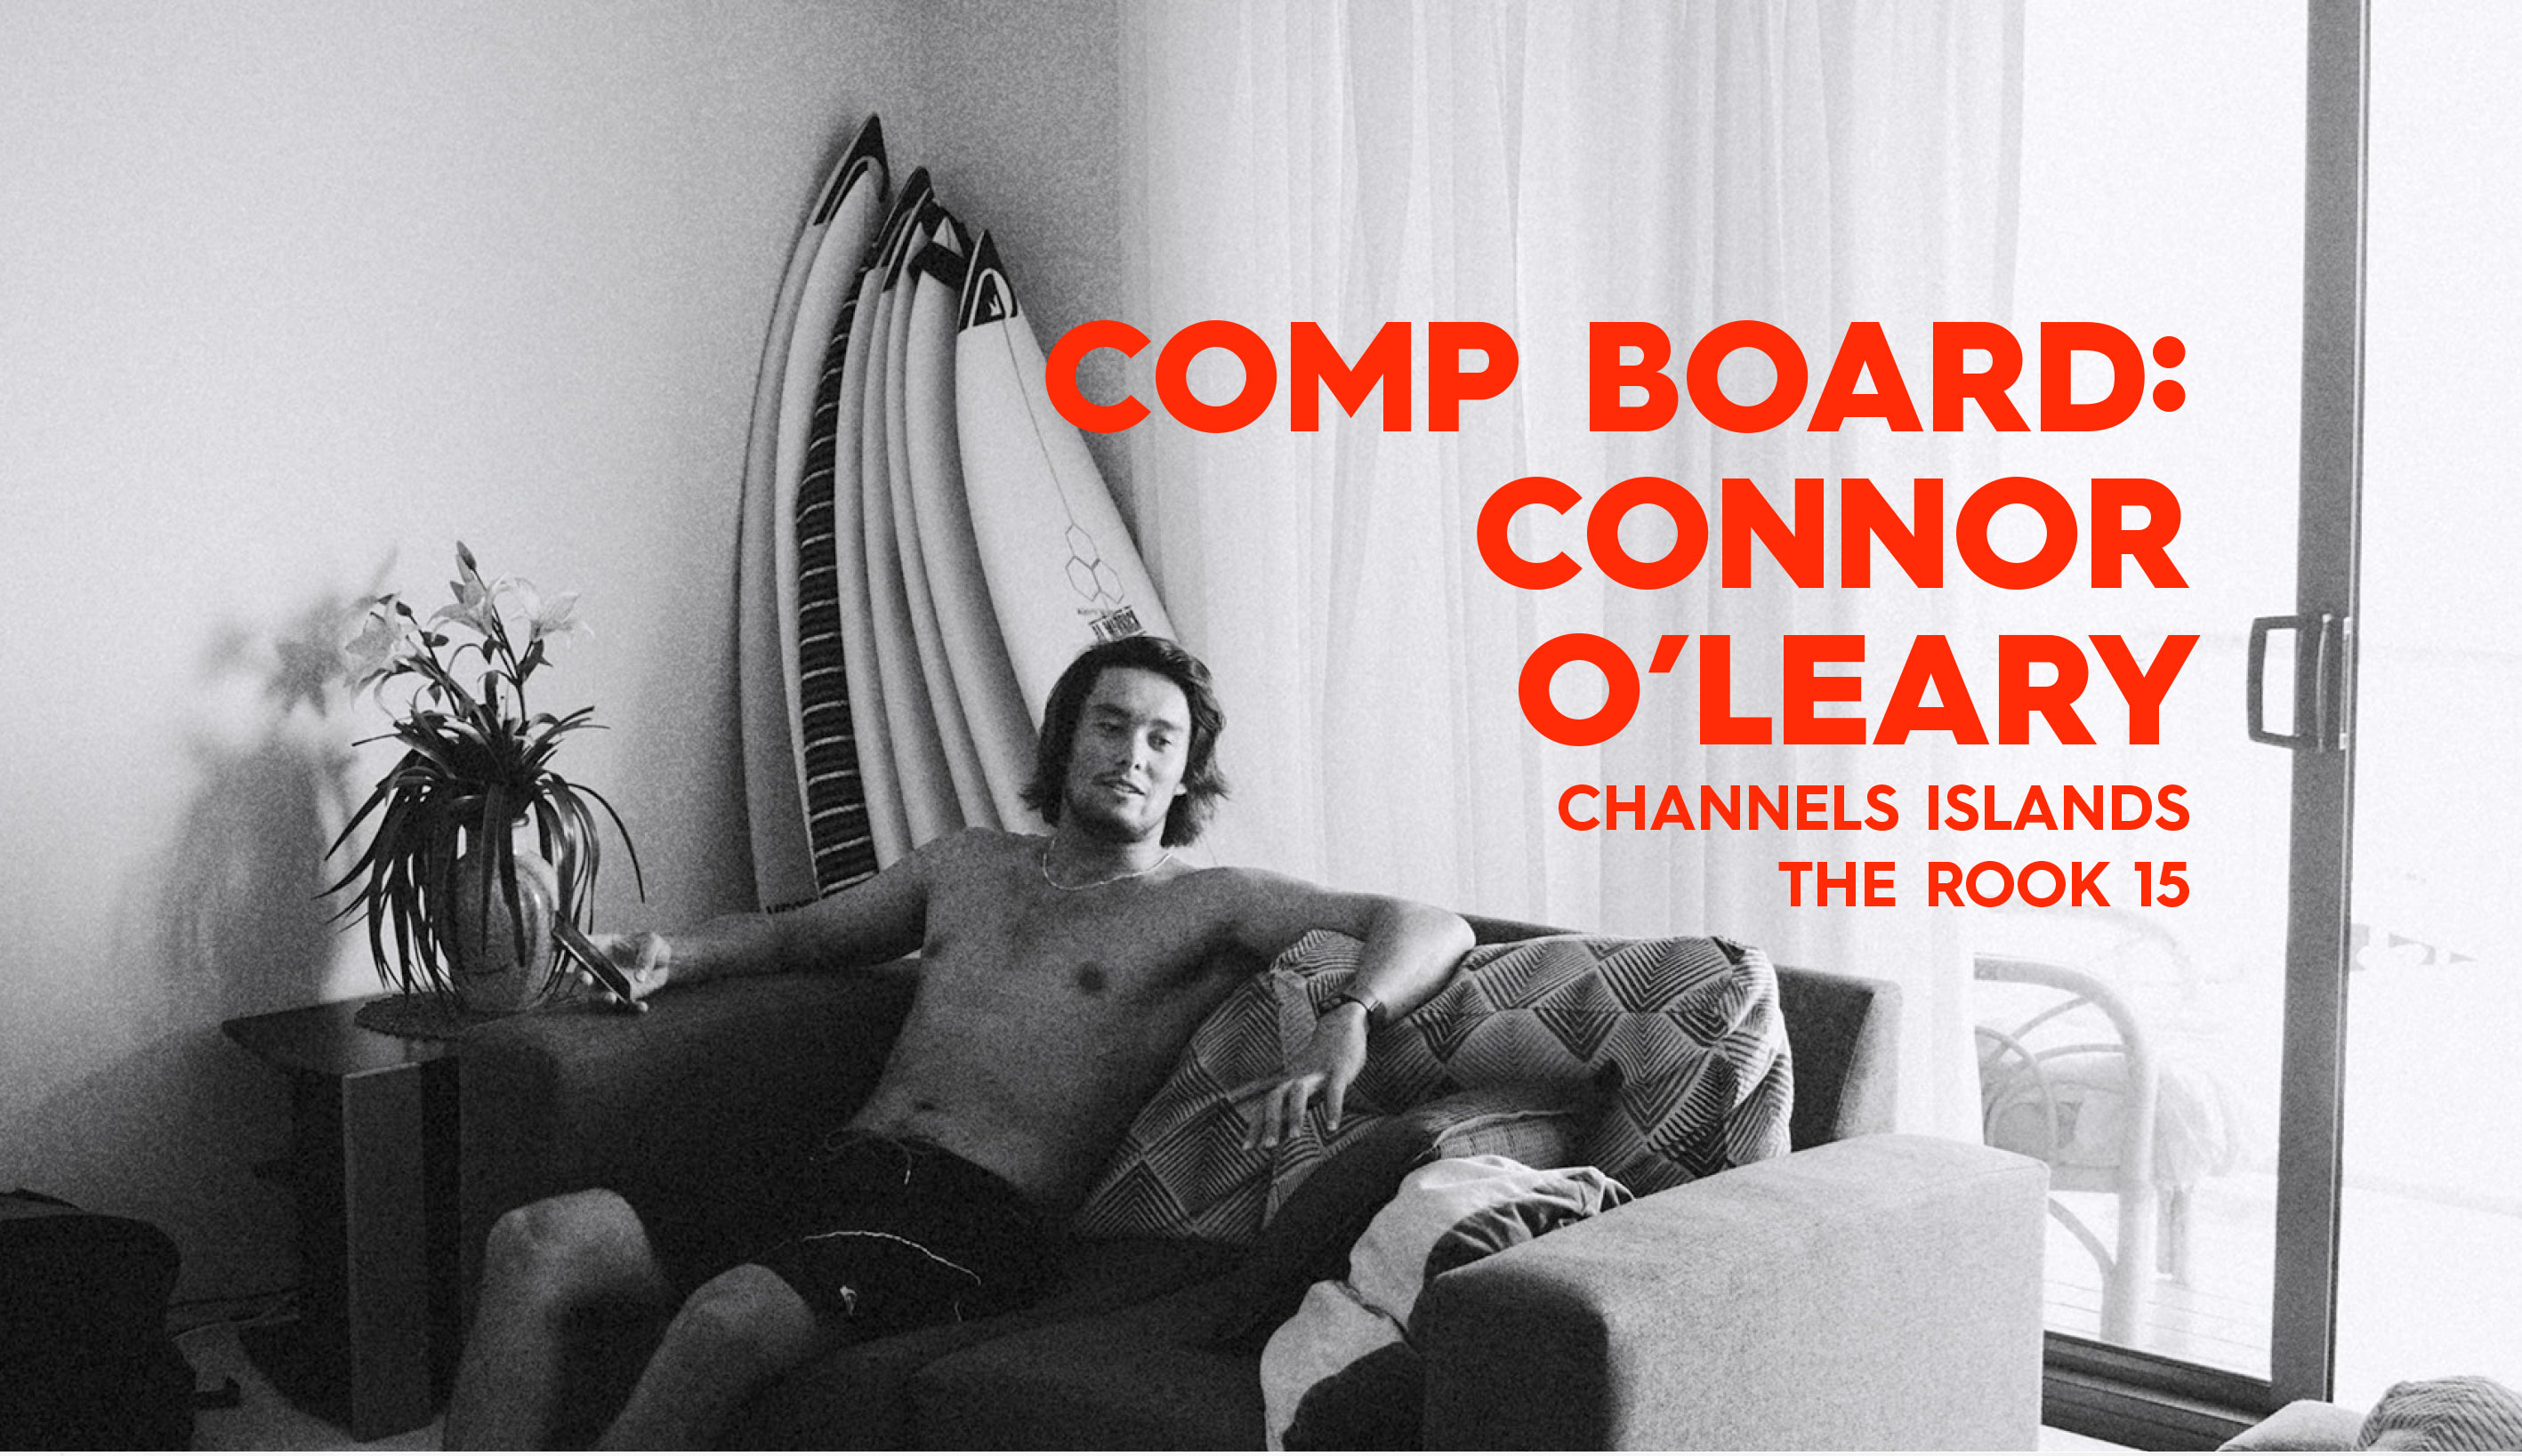 Comp Board: Connor O'leary